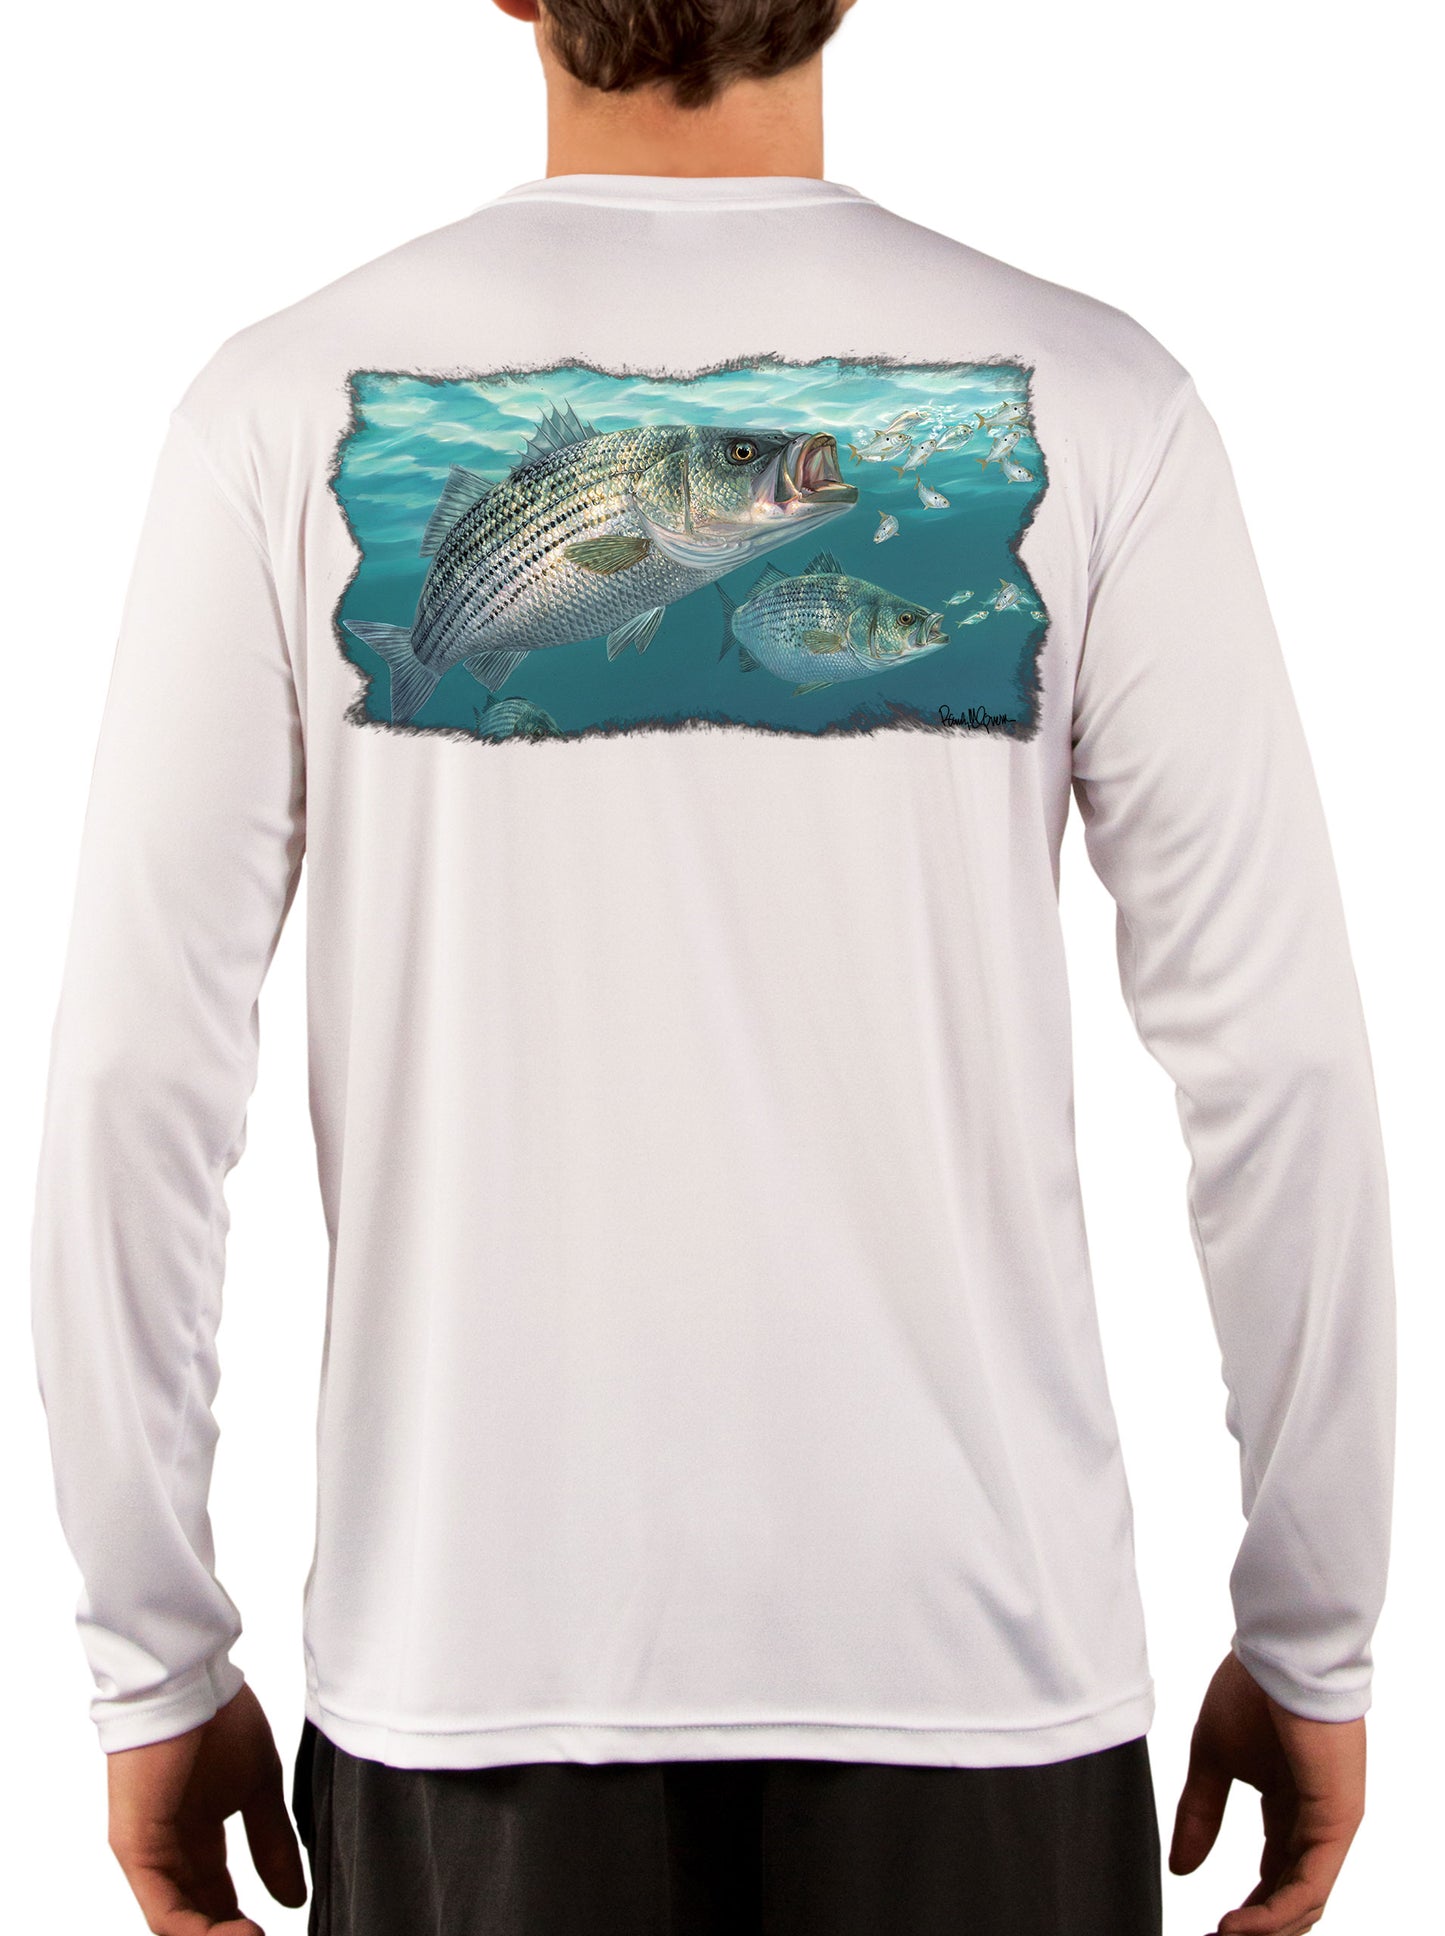 Striped Bass Fishing Shirts with Baitfish by Artist Randy McGovern - Skiff Life